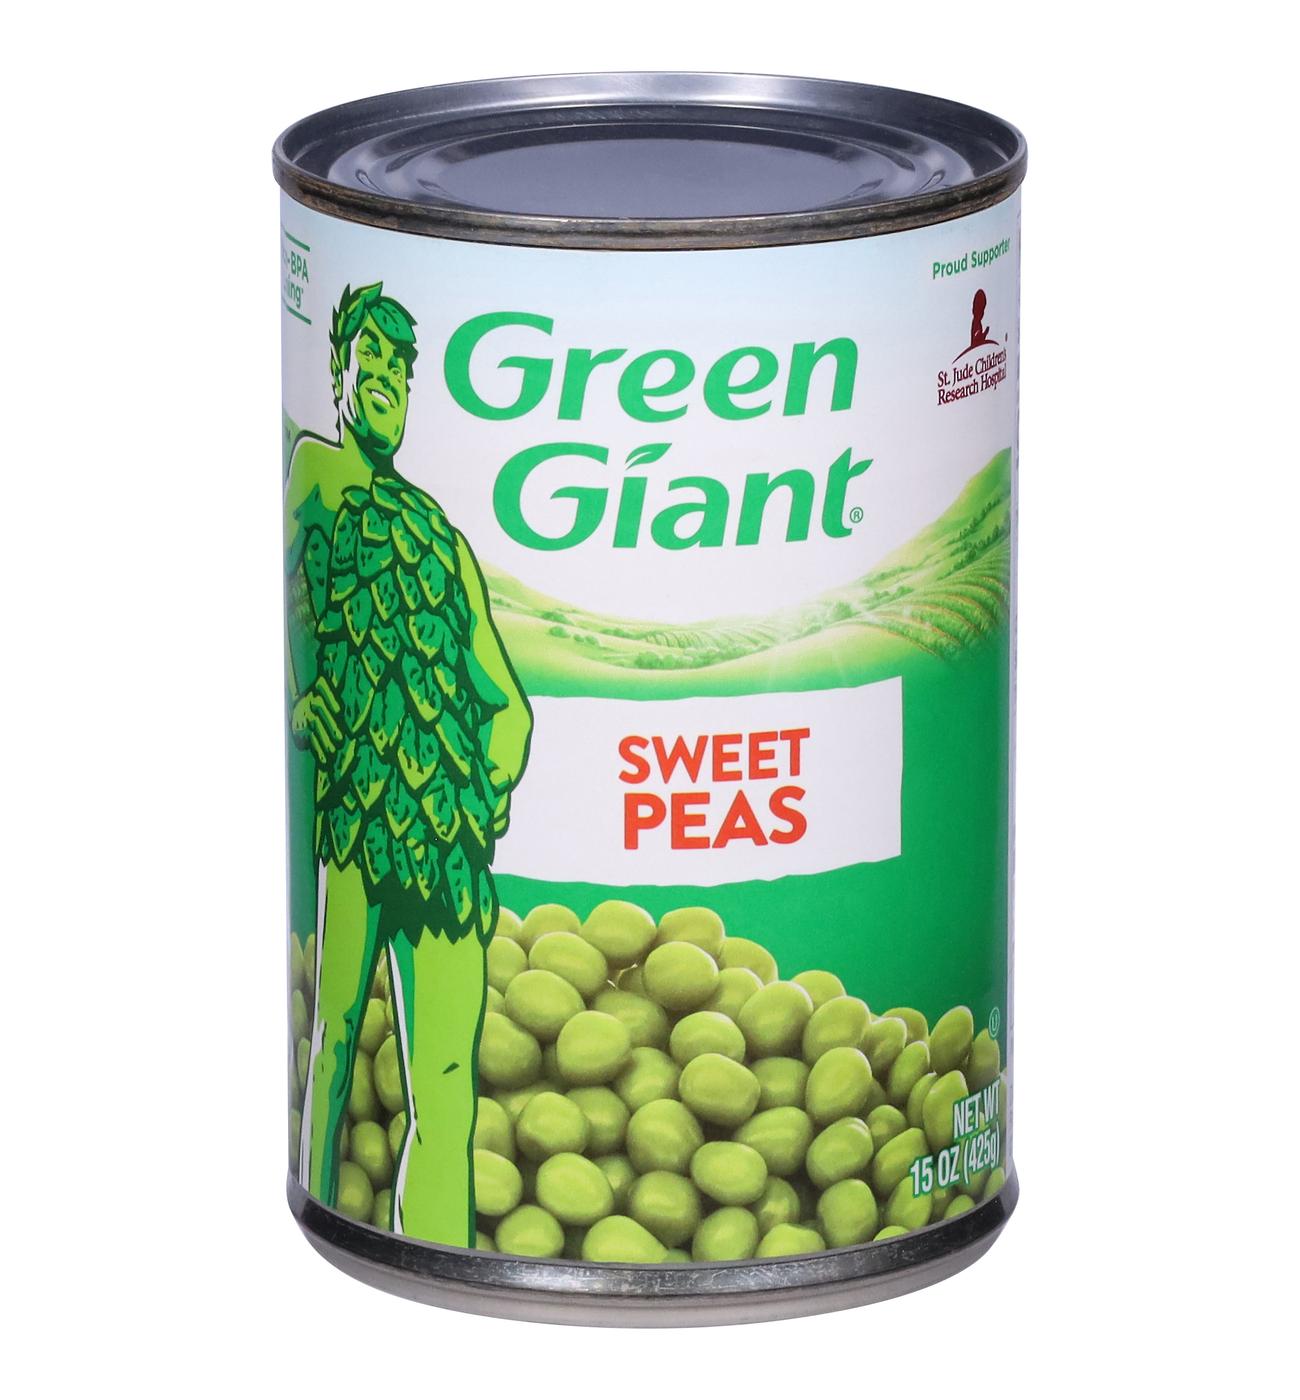 Green Giant Sweet Peas; image 1 of 3